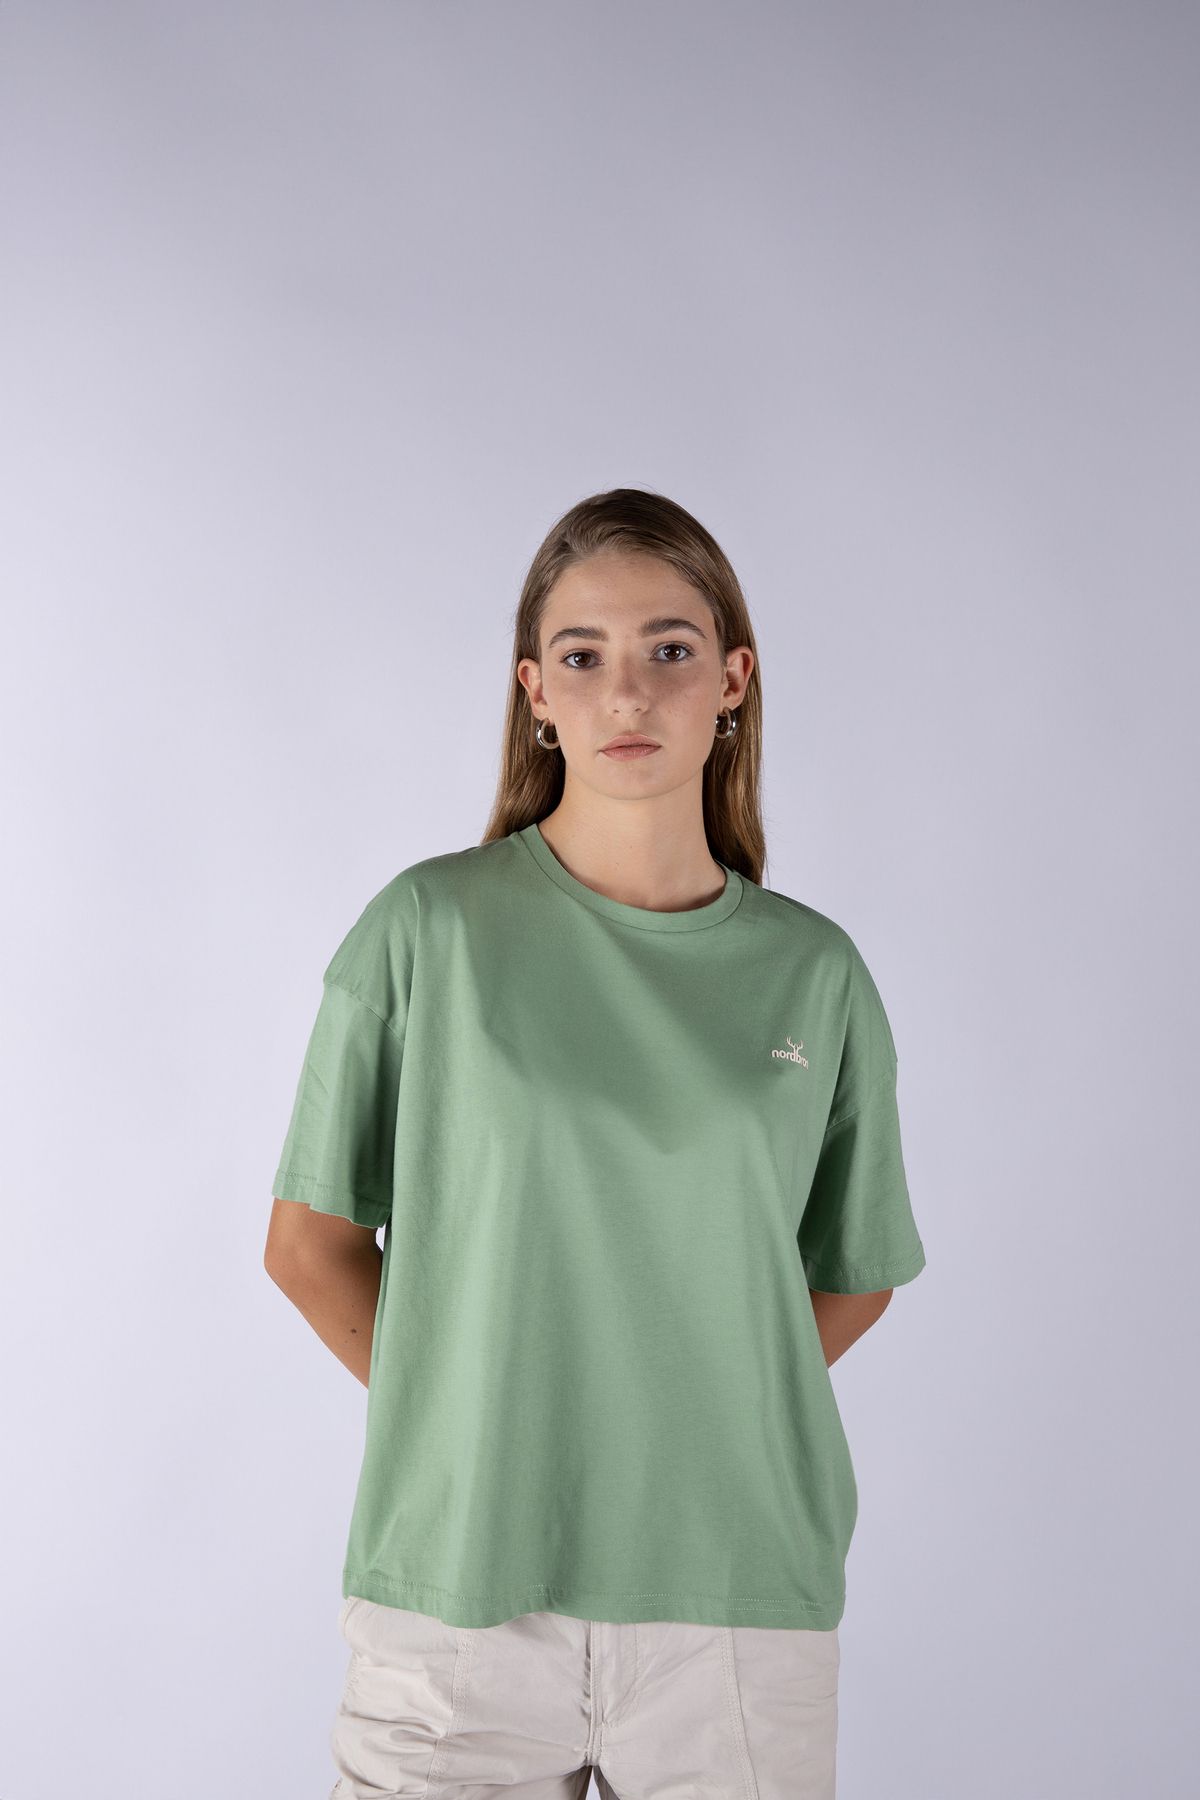 Nordbron Kadın Açık Yeşil Kramer Pamuklu Baskılı Relaxed Fit/rahat Kesim Oversize Bisiklet Yaka T-shirt